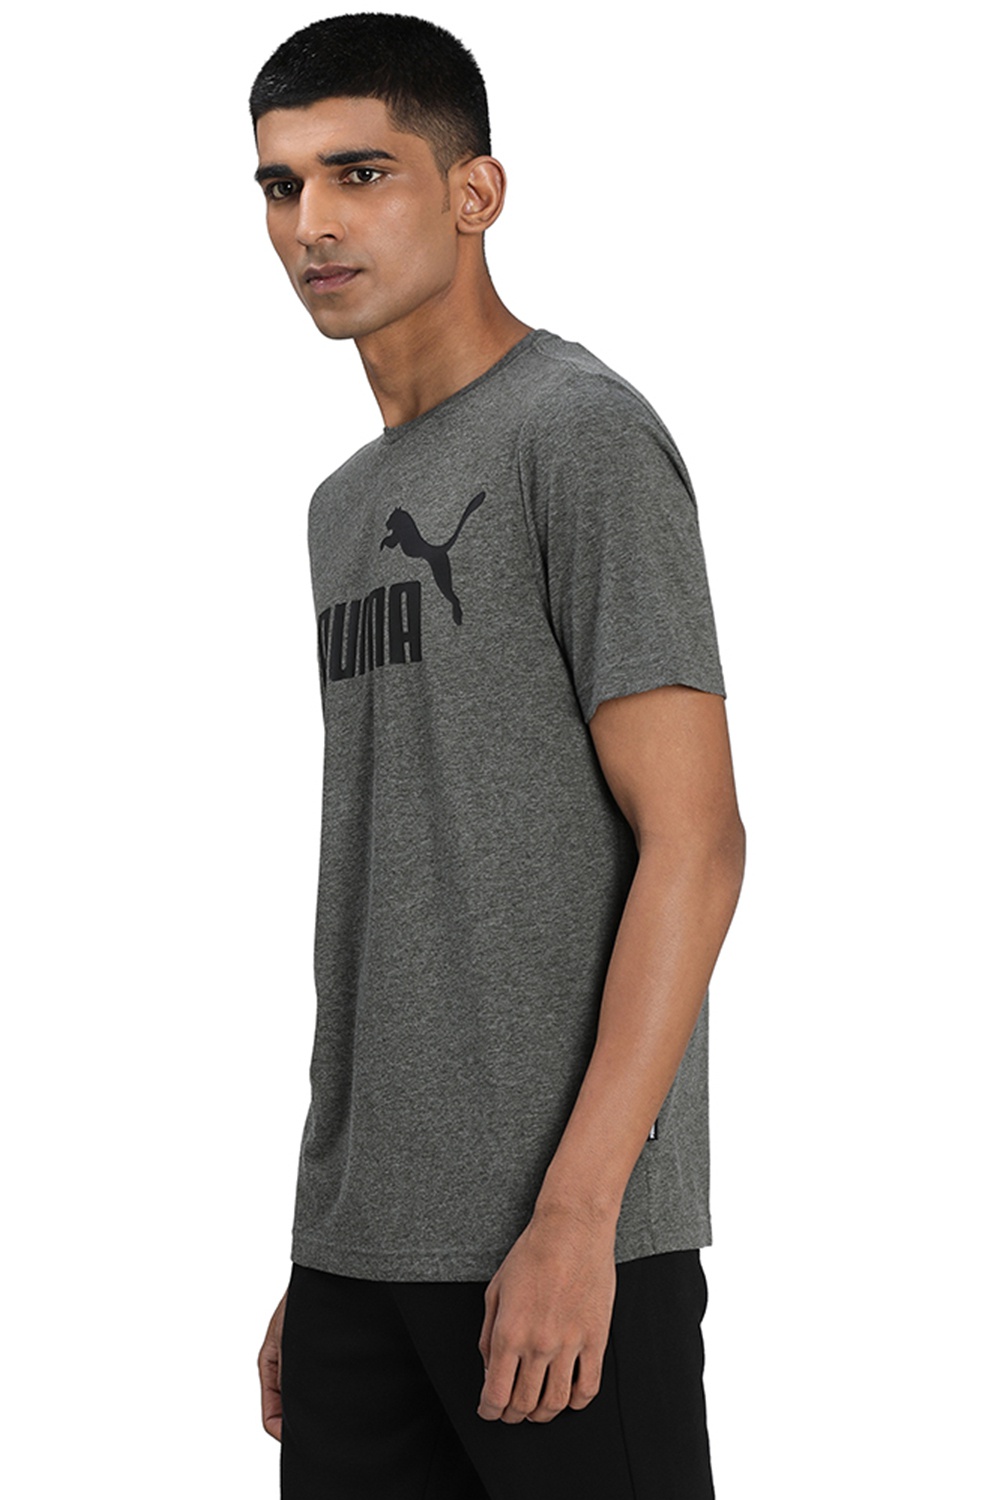 Puma Solid Color Lifestyle Logo Men's Short Sleeves T-Shirt